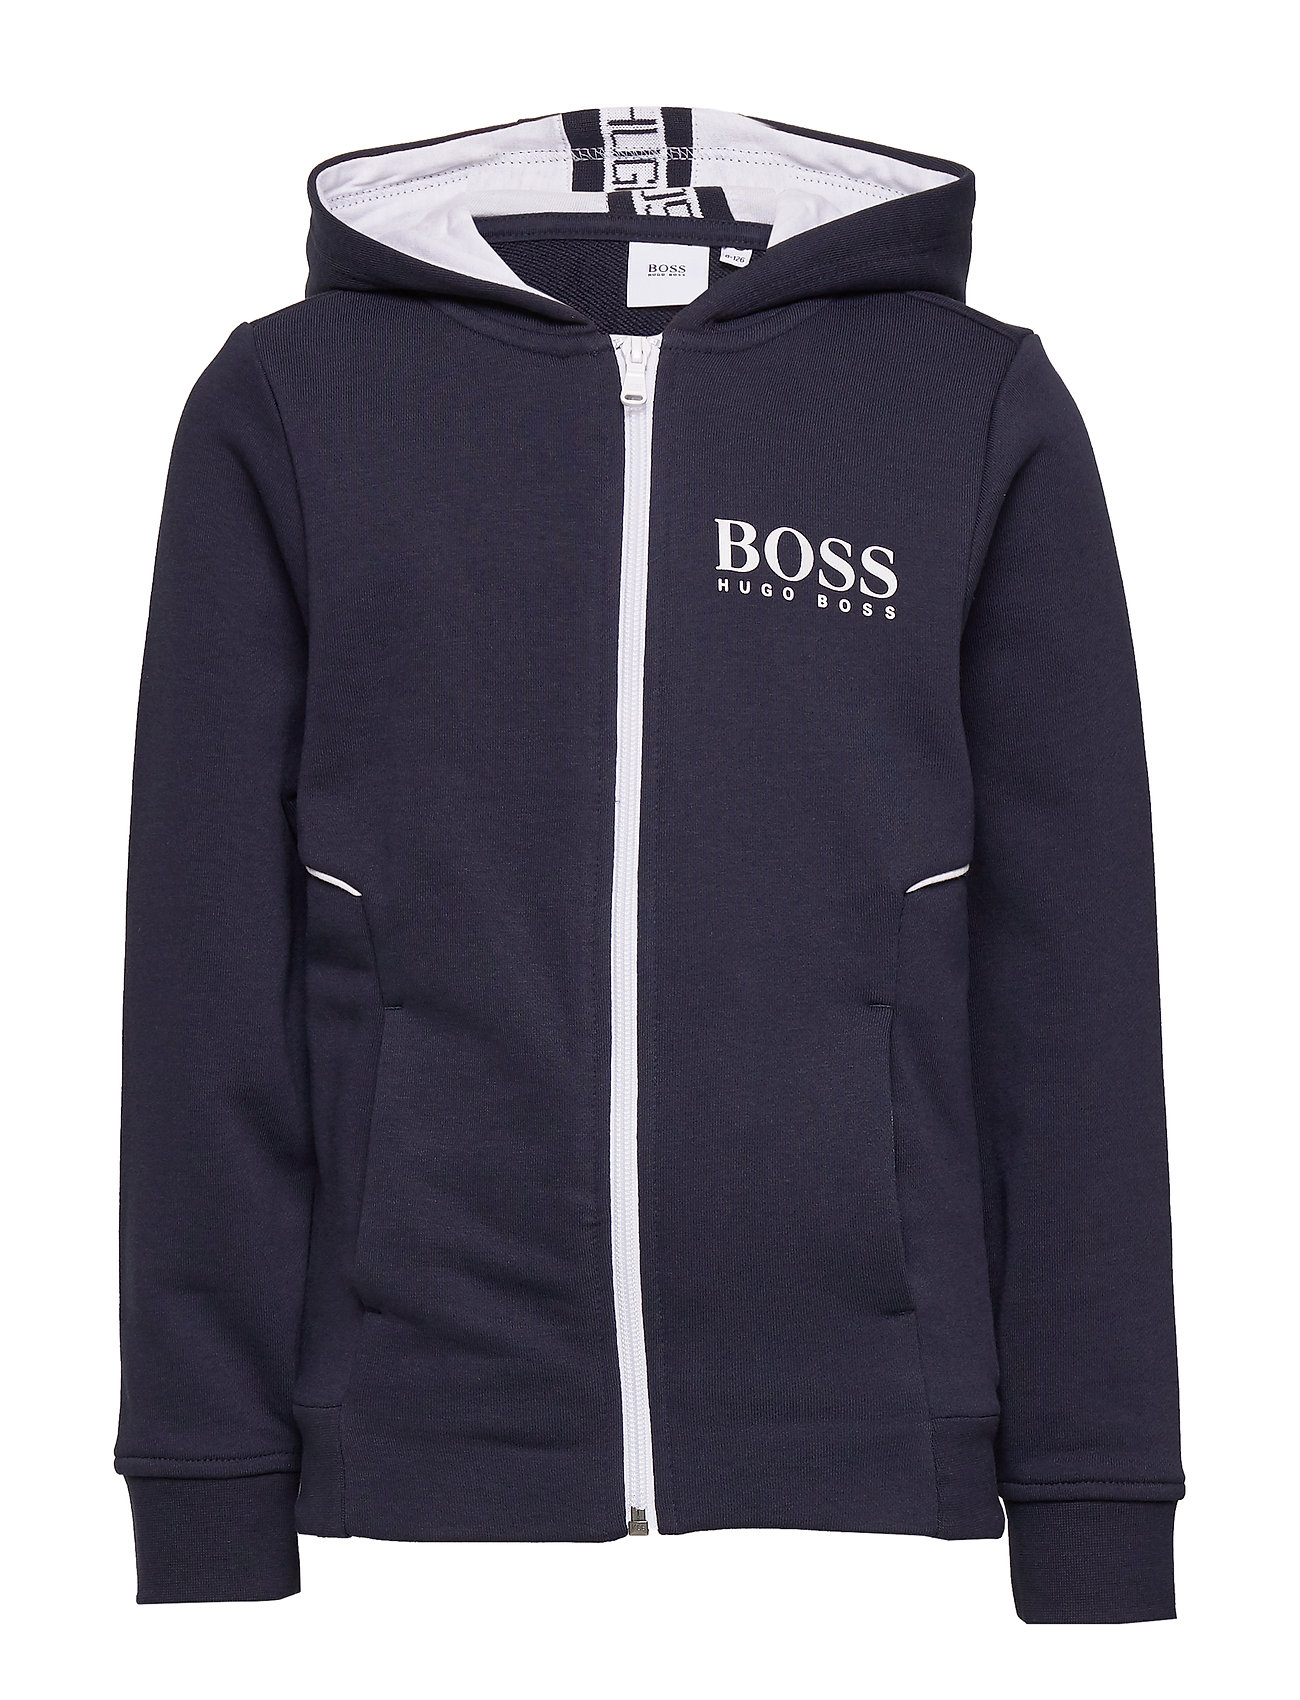 hugo boss hoodie boozt OFF 70% - Online 